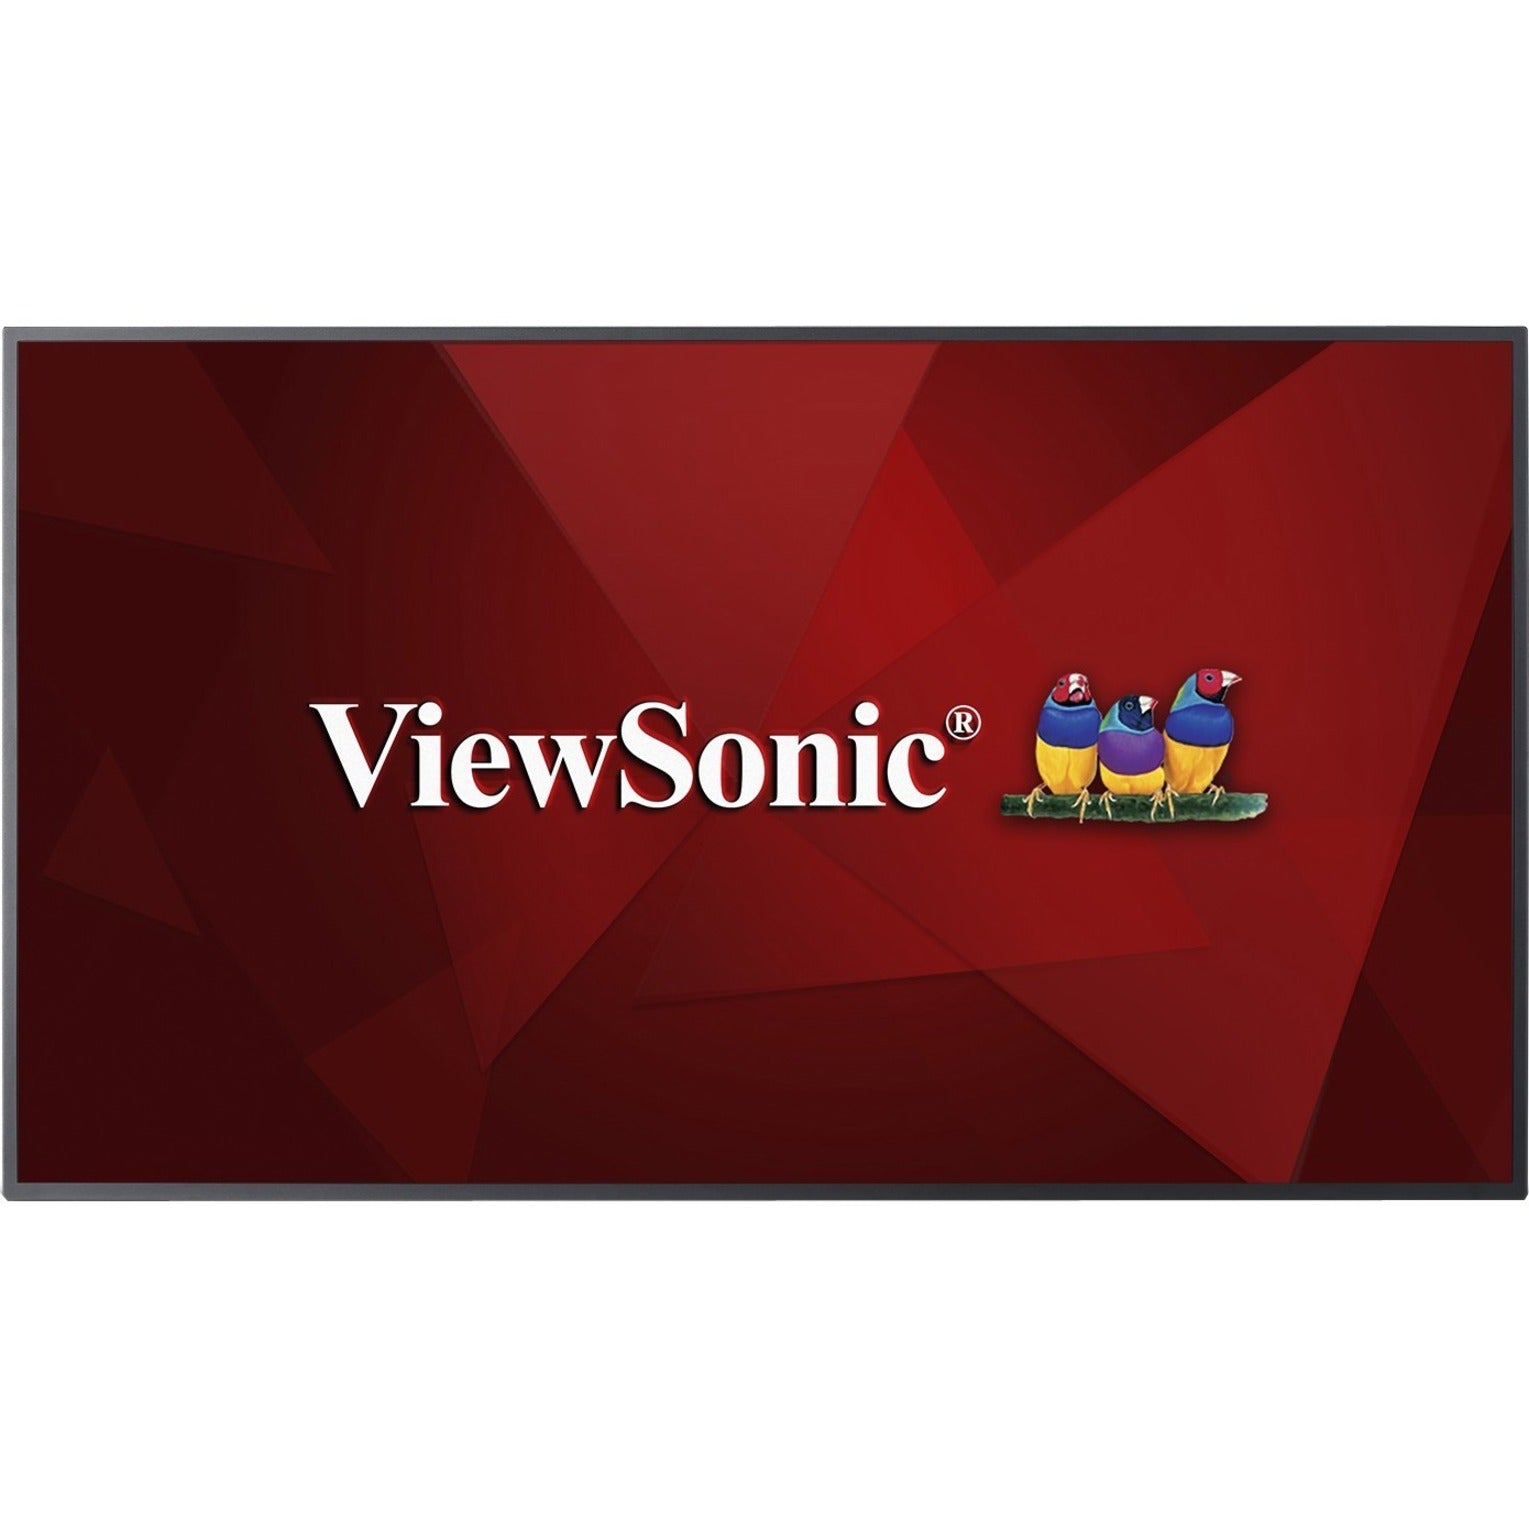 ViewSonic CDE5010 Digital Signage Display, 50" 4K LCD, 350 Nit Brightness, 3 Year Warranty, ENERGY STAR 7.0